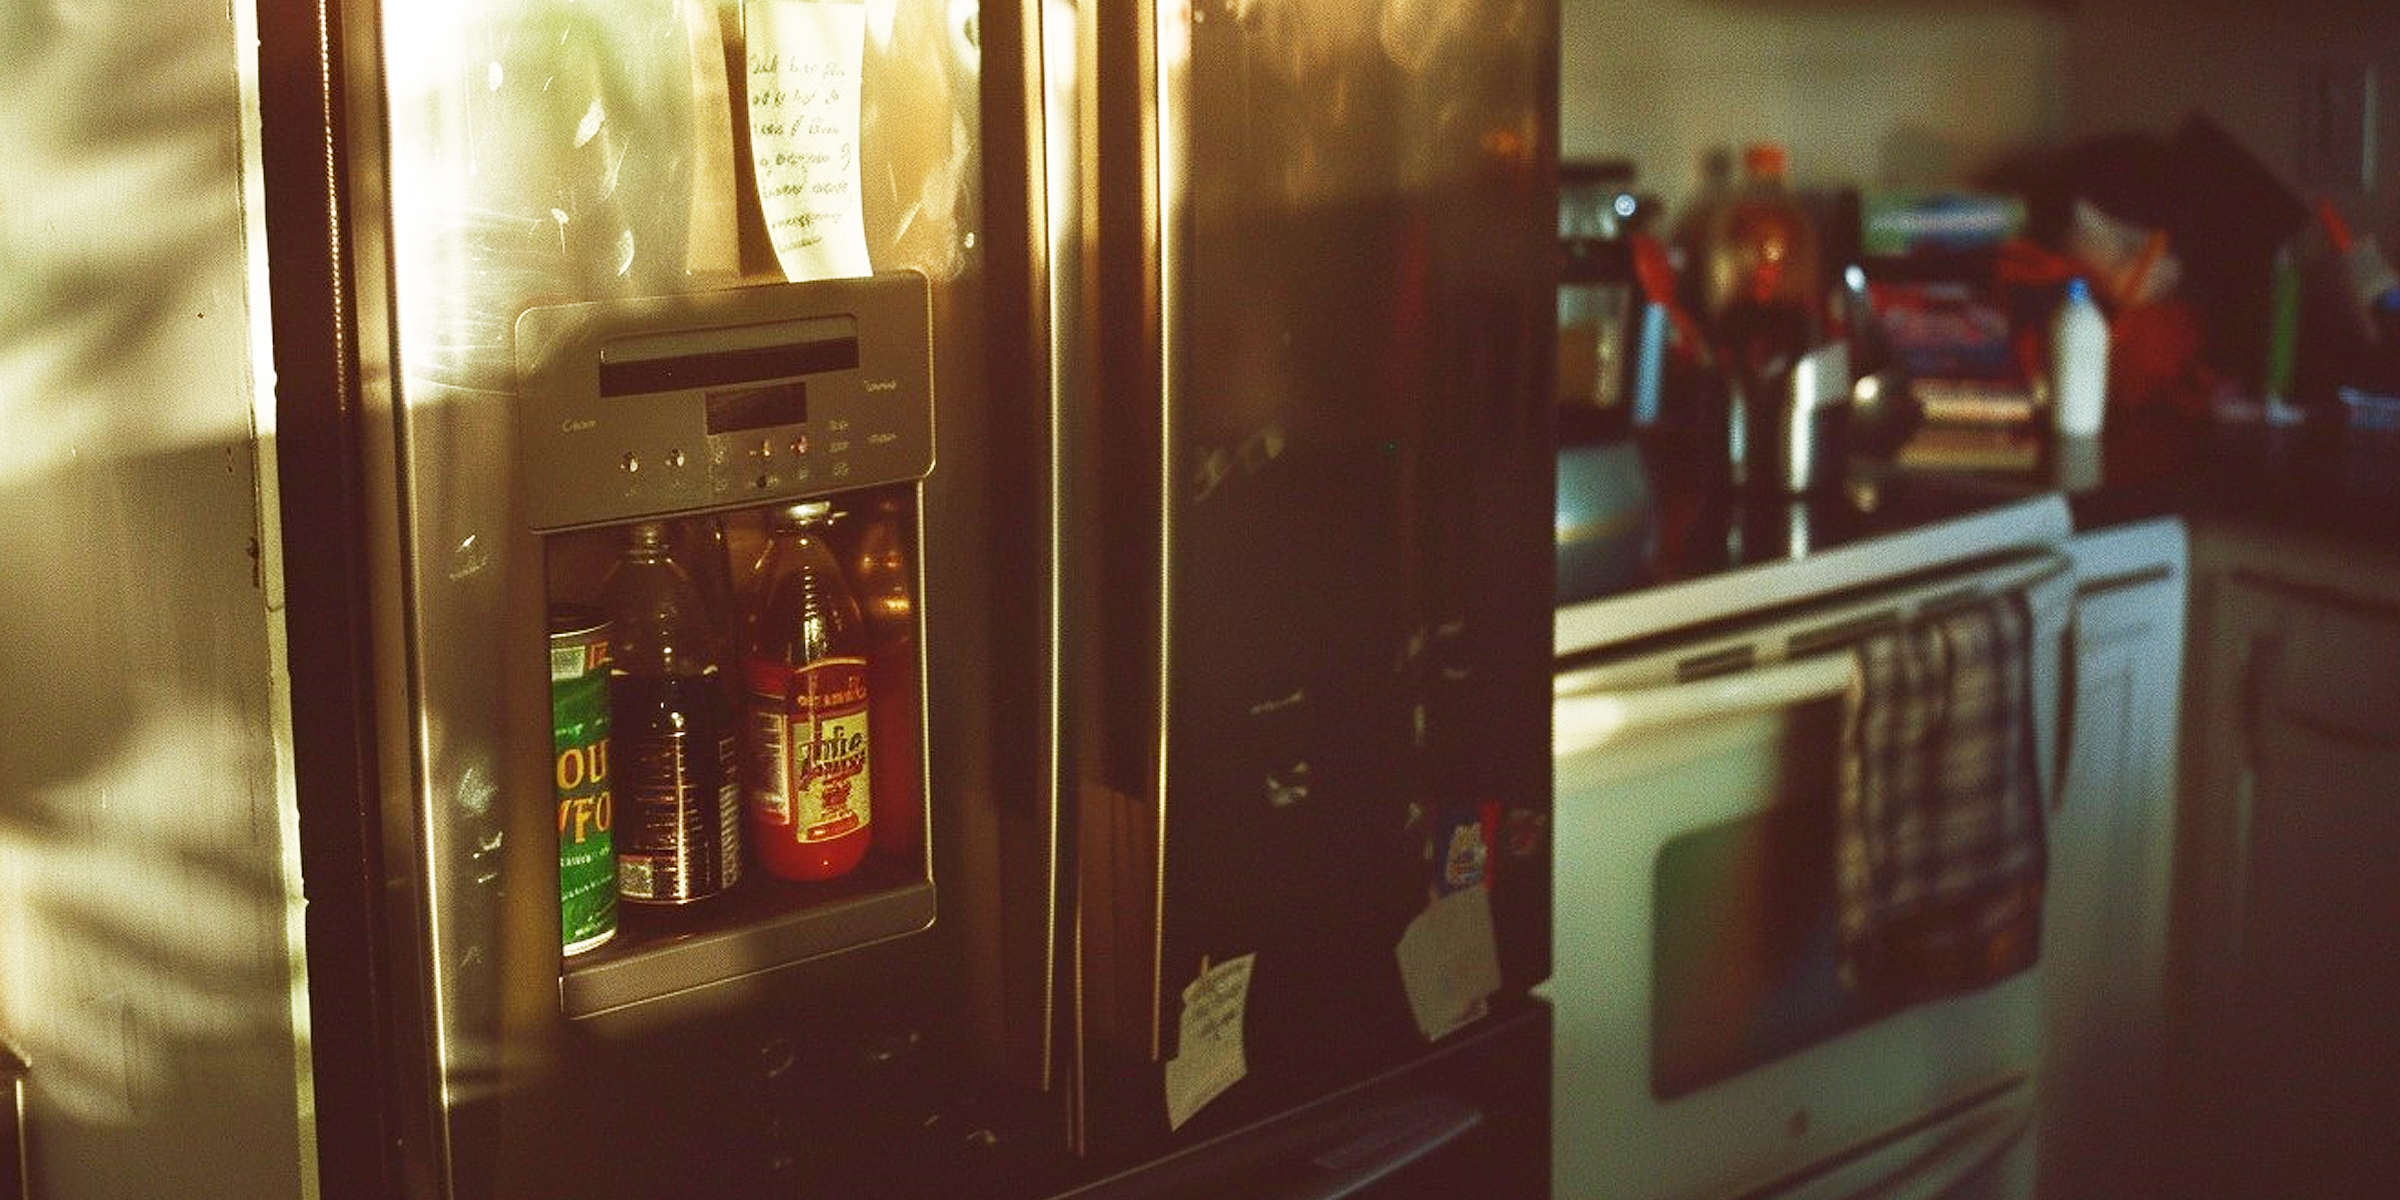 A note on a fridge | Source: Midjourney